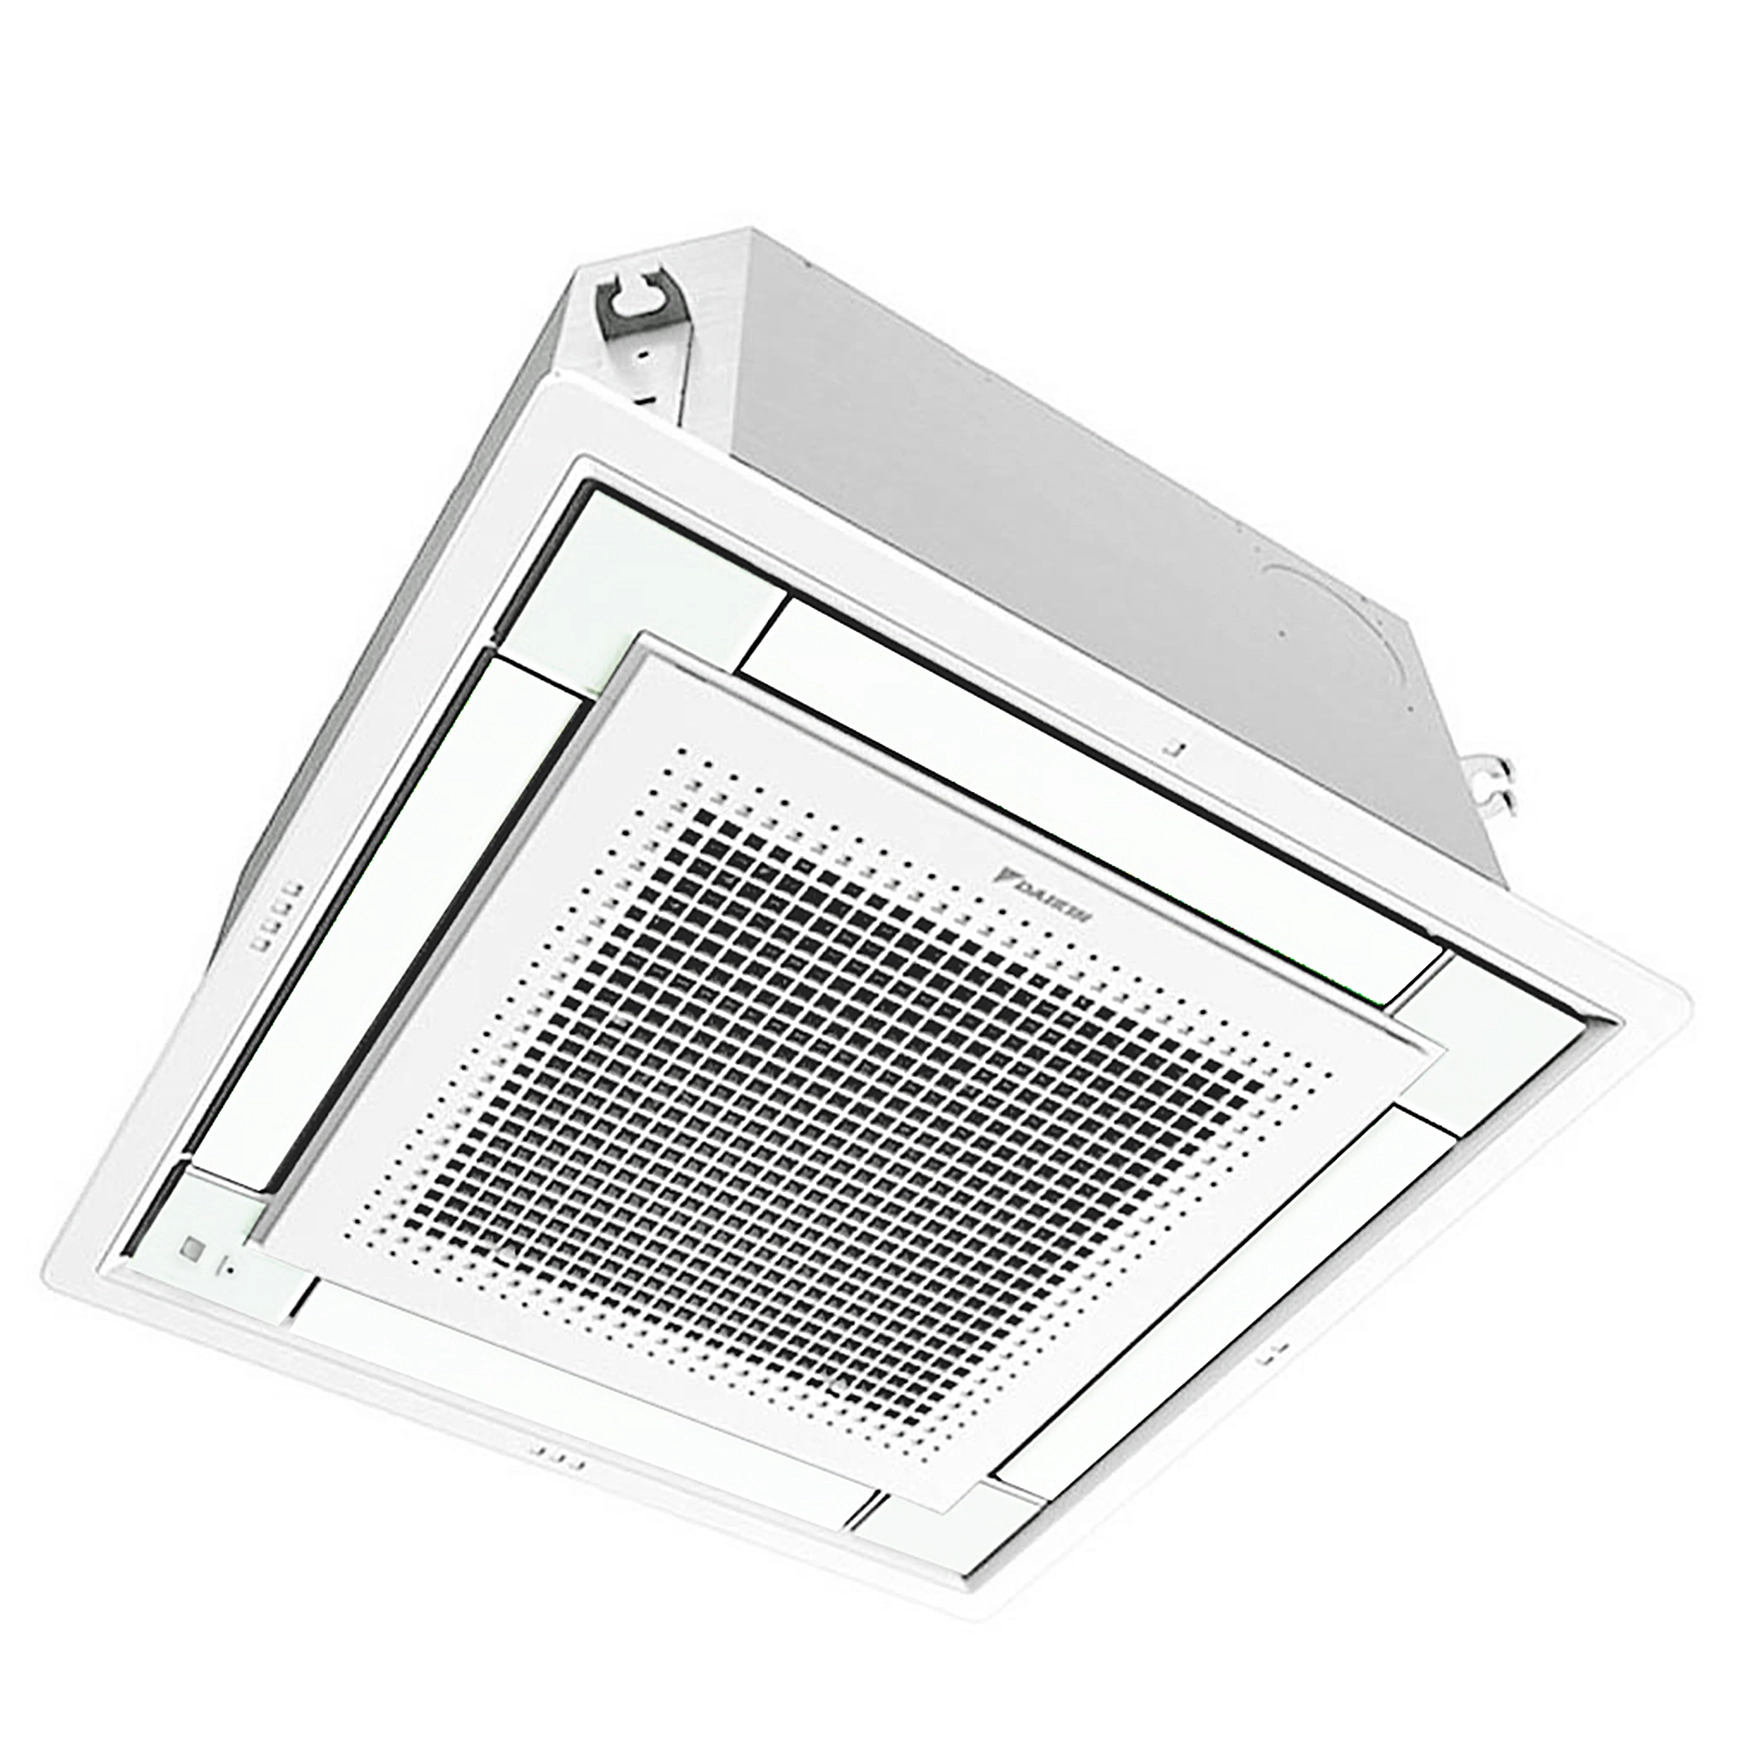 Daikin ceiling mounted air conditioning FFFC35AVM inverter 1.5 Hp